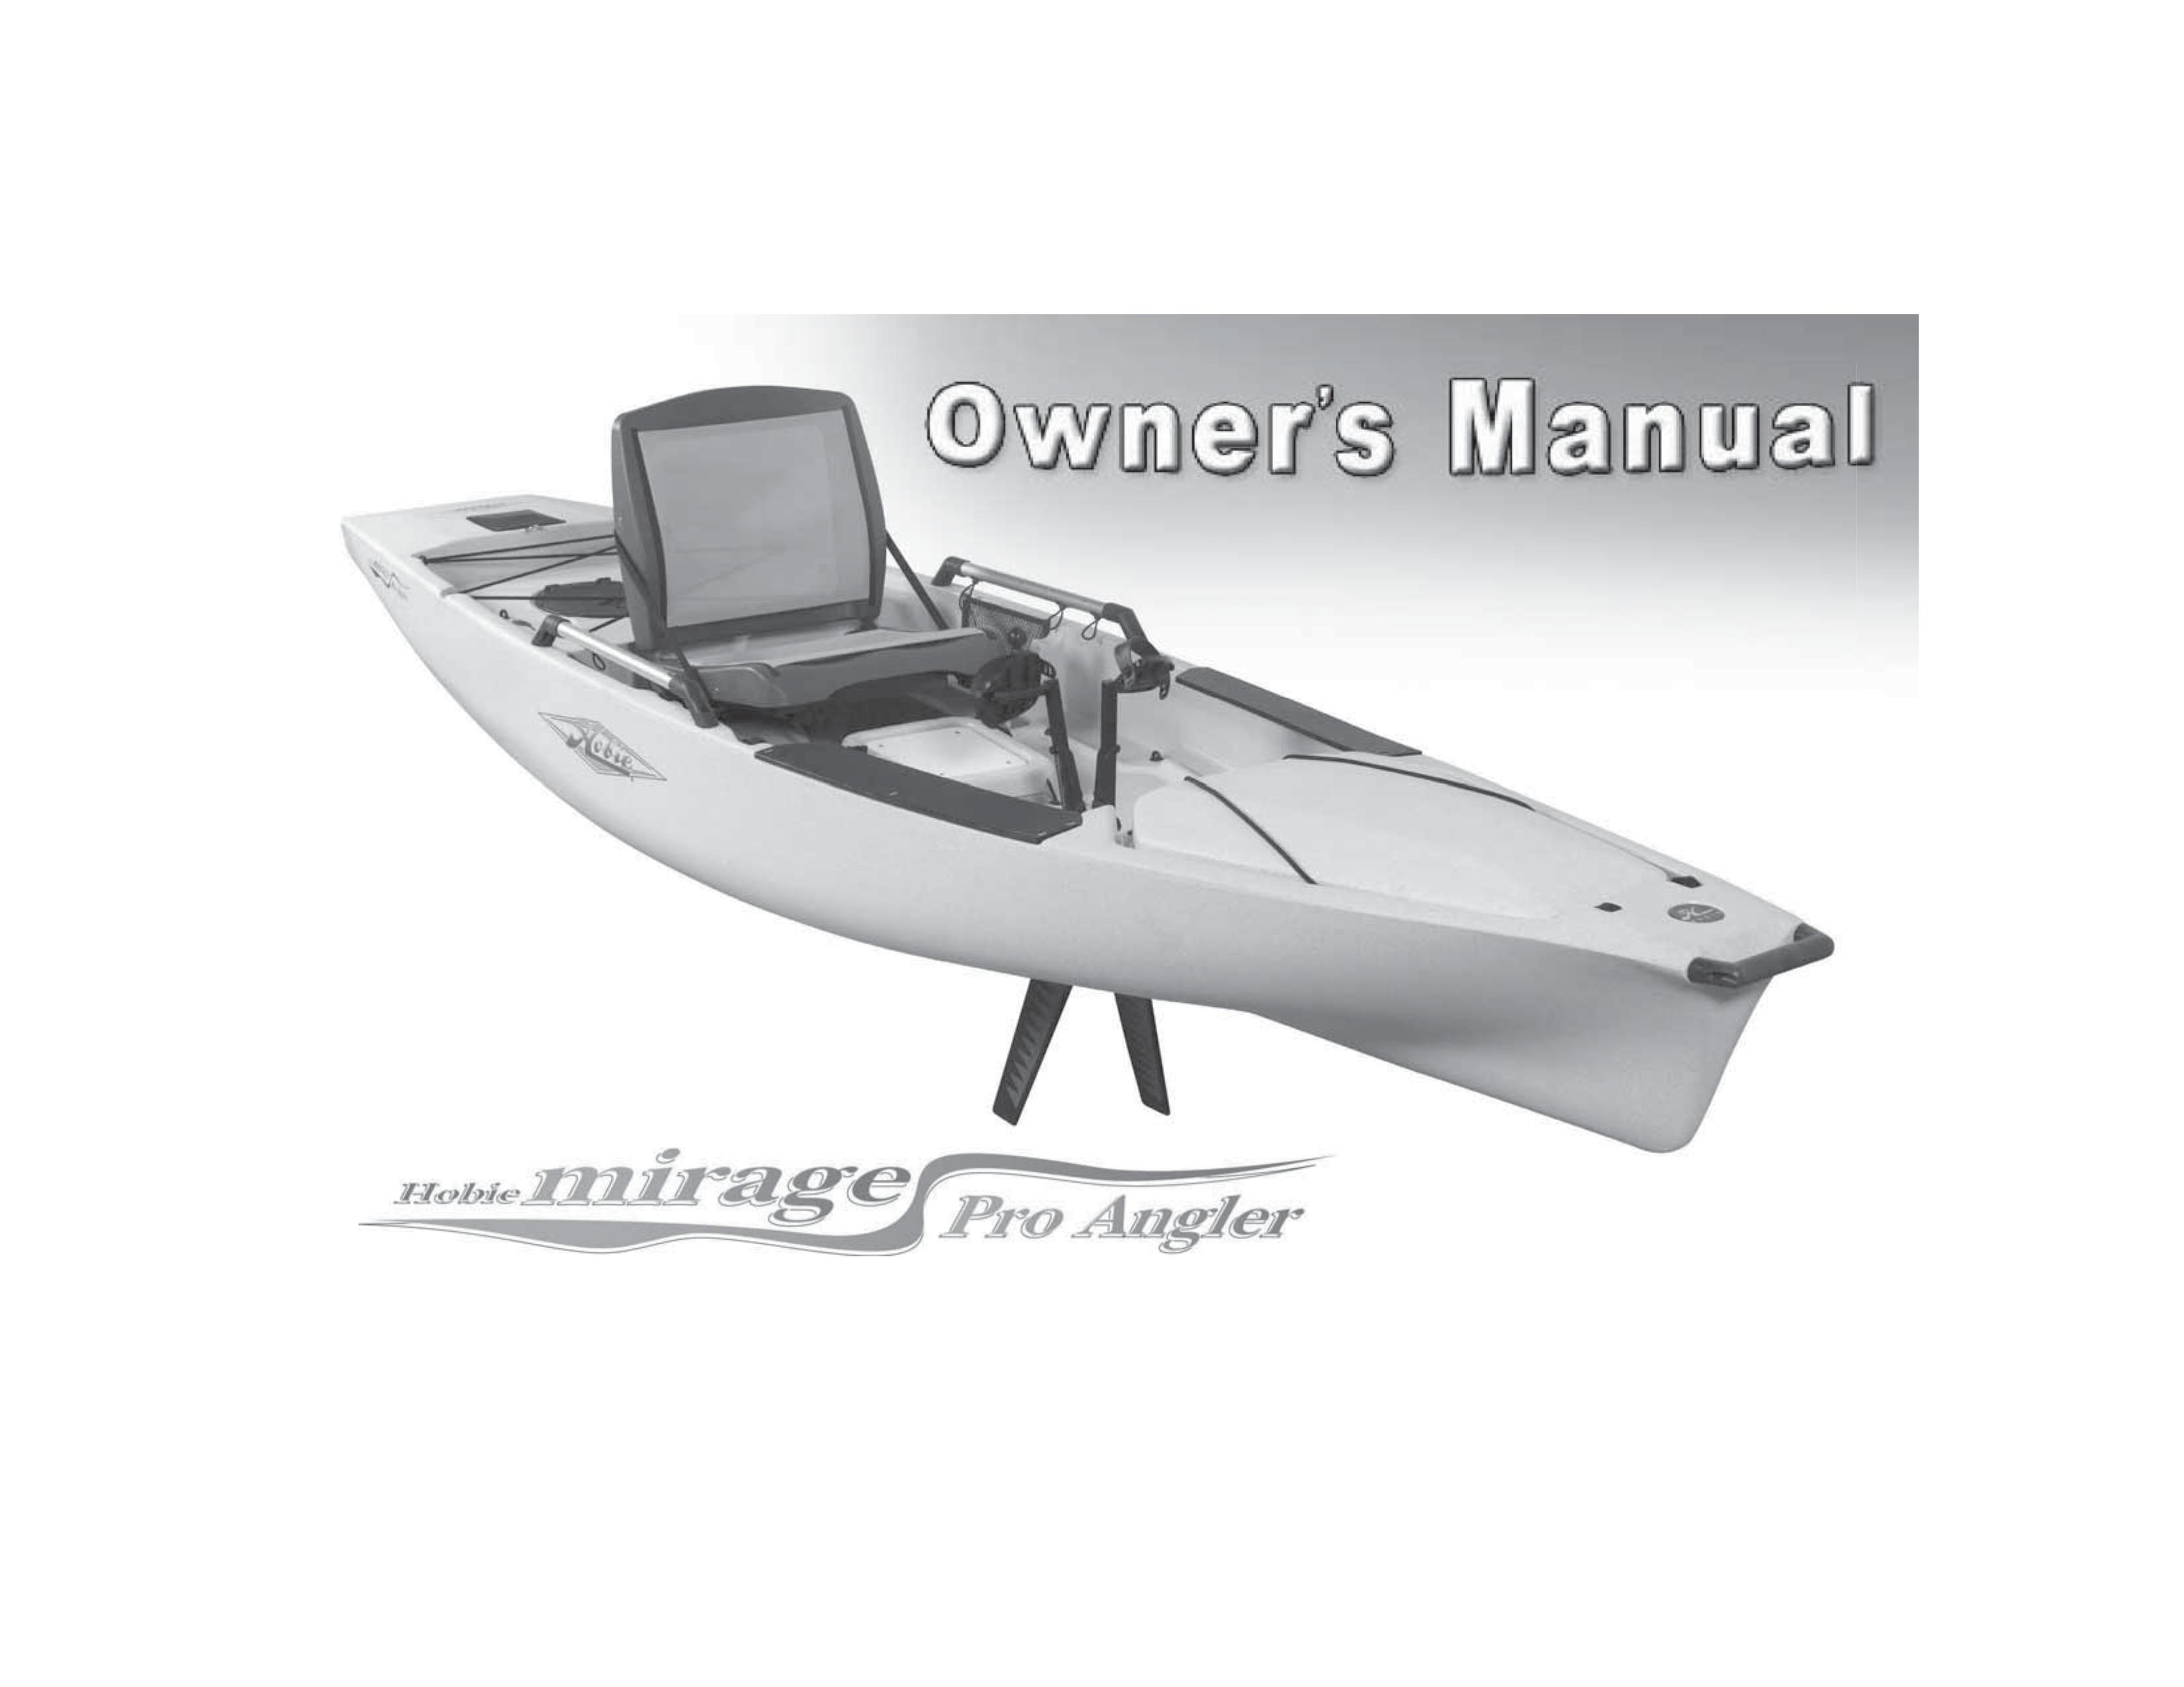 Hobie Pro Angler Boat User Manual